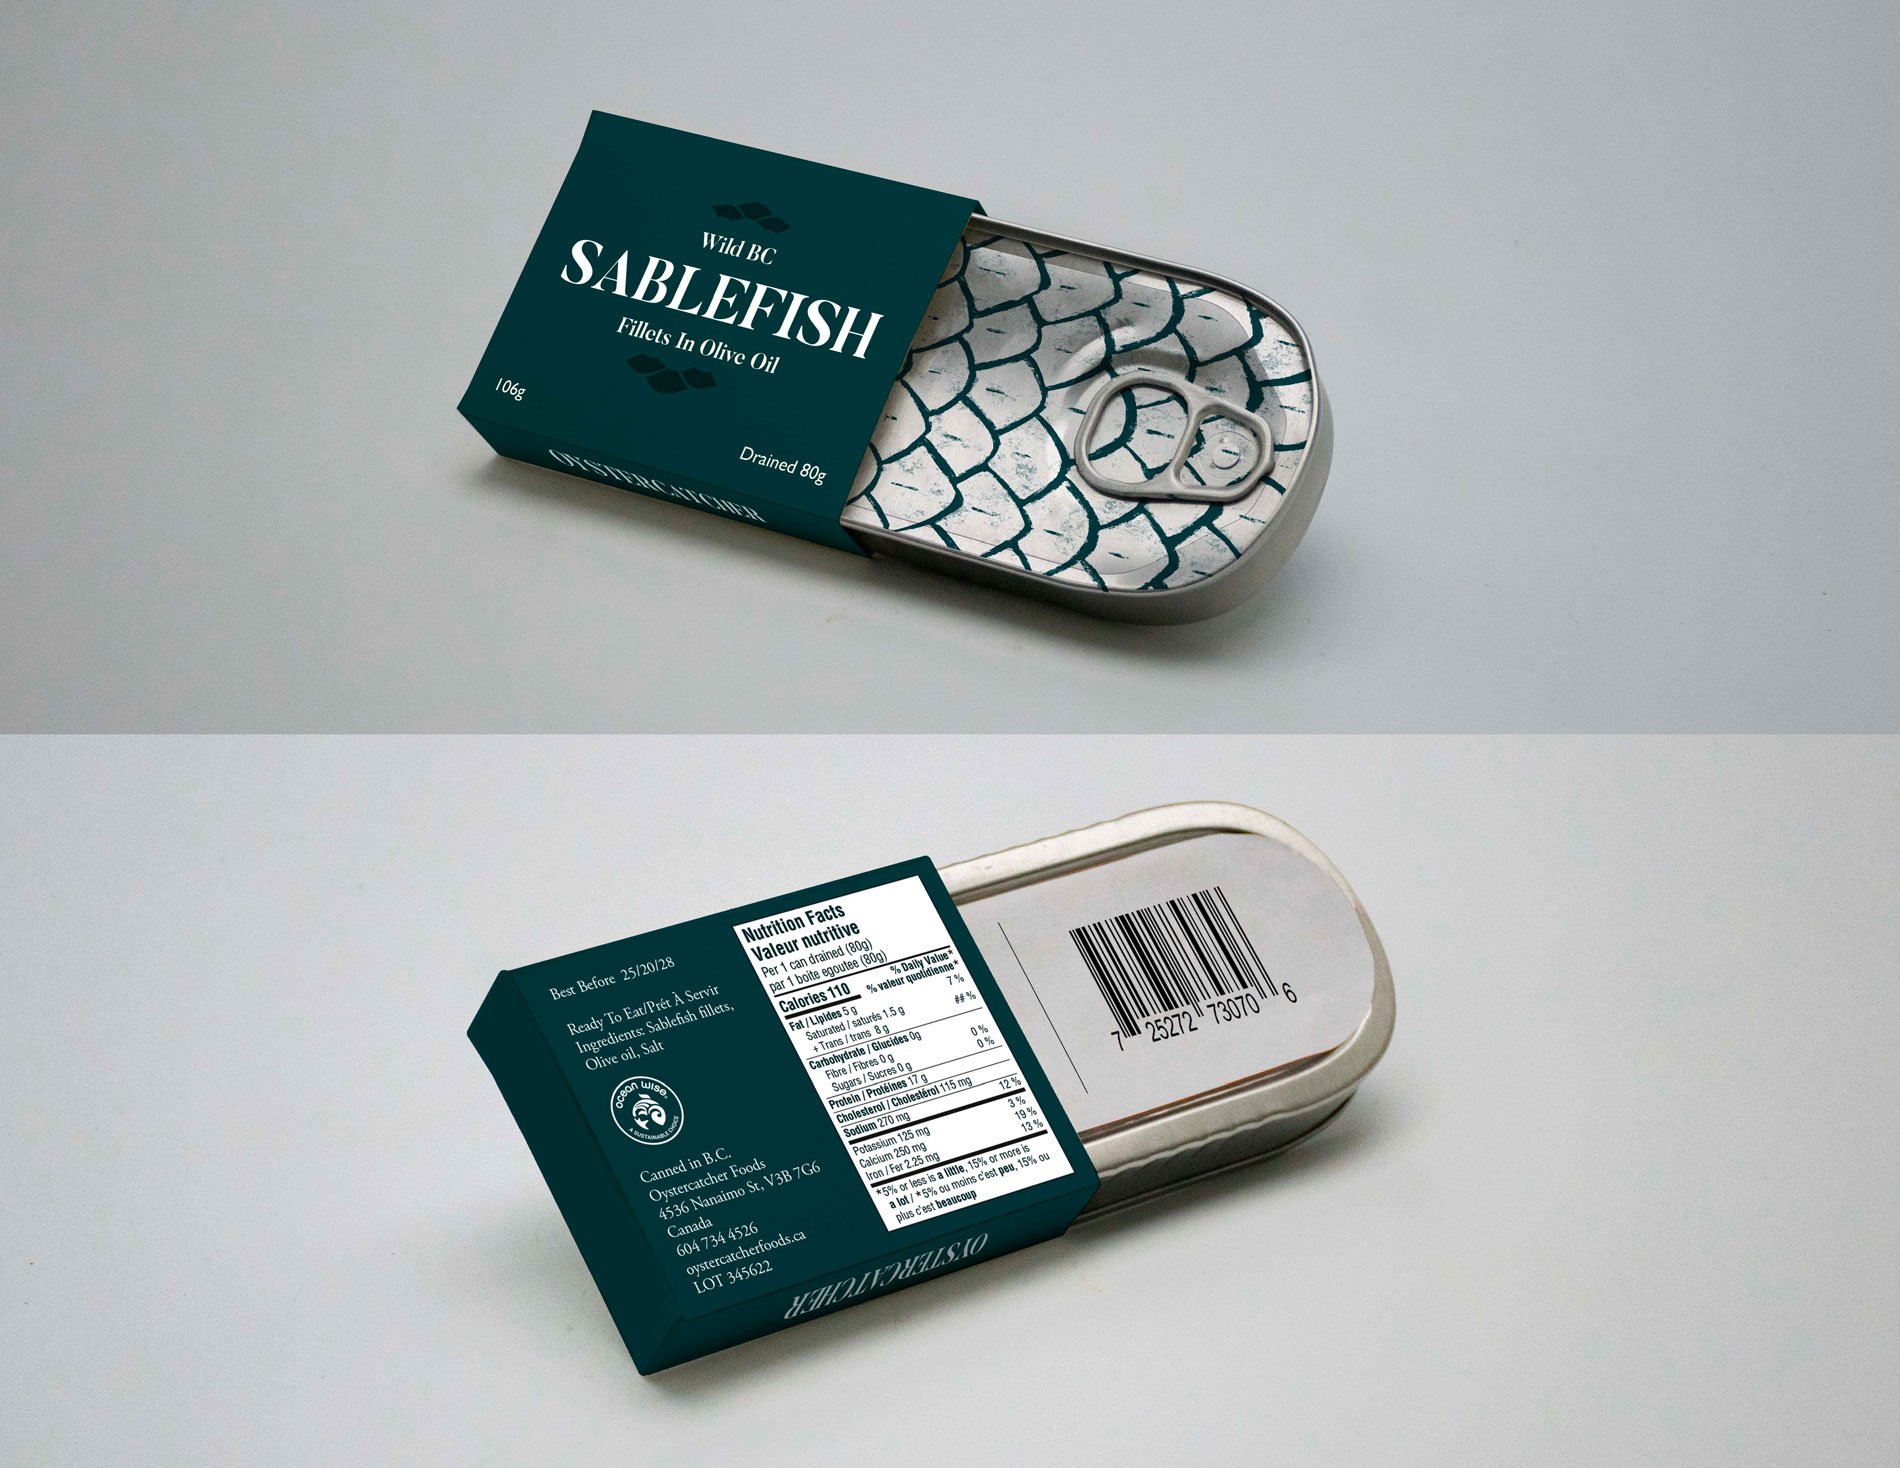 ethan-woronko--sardine-packaging--oyster-catcher--visual-communication-studio-branding-concentration-capilano-university-idea-school-of-design--02.jpg